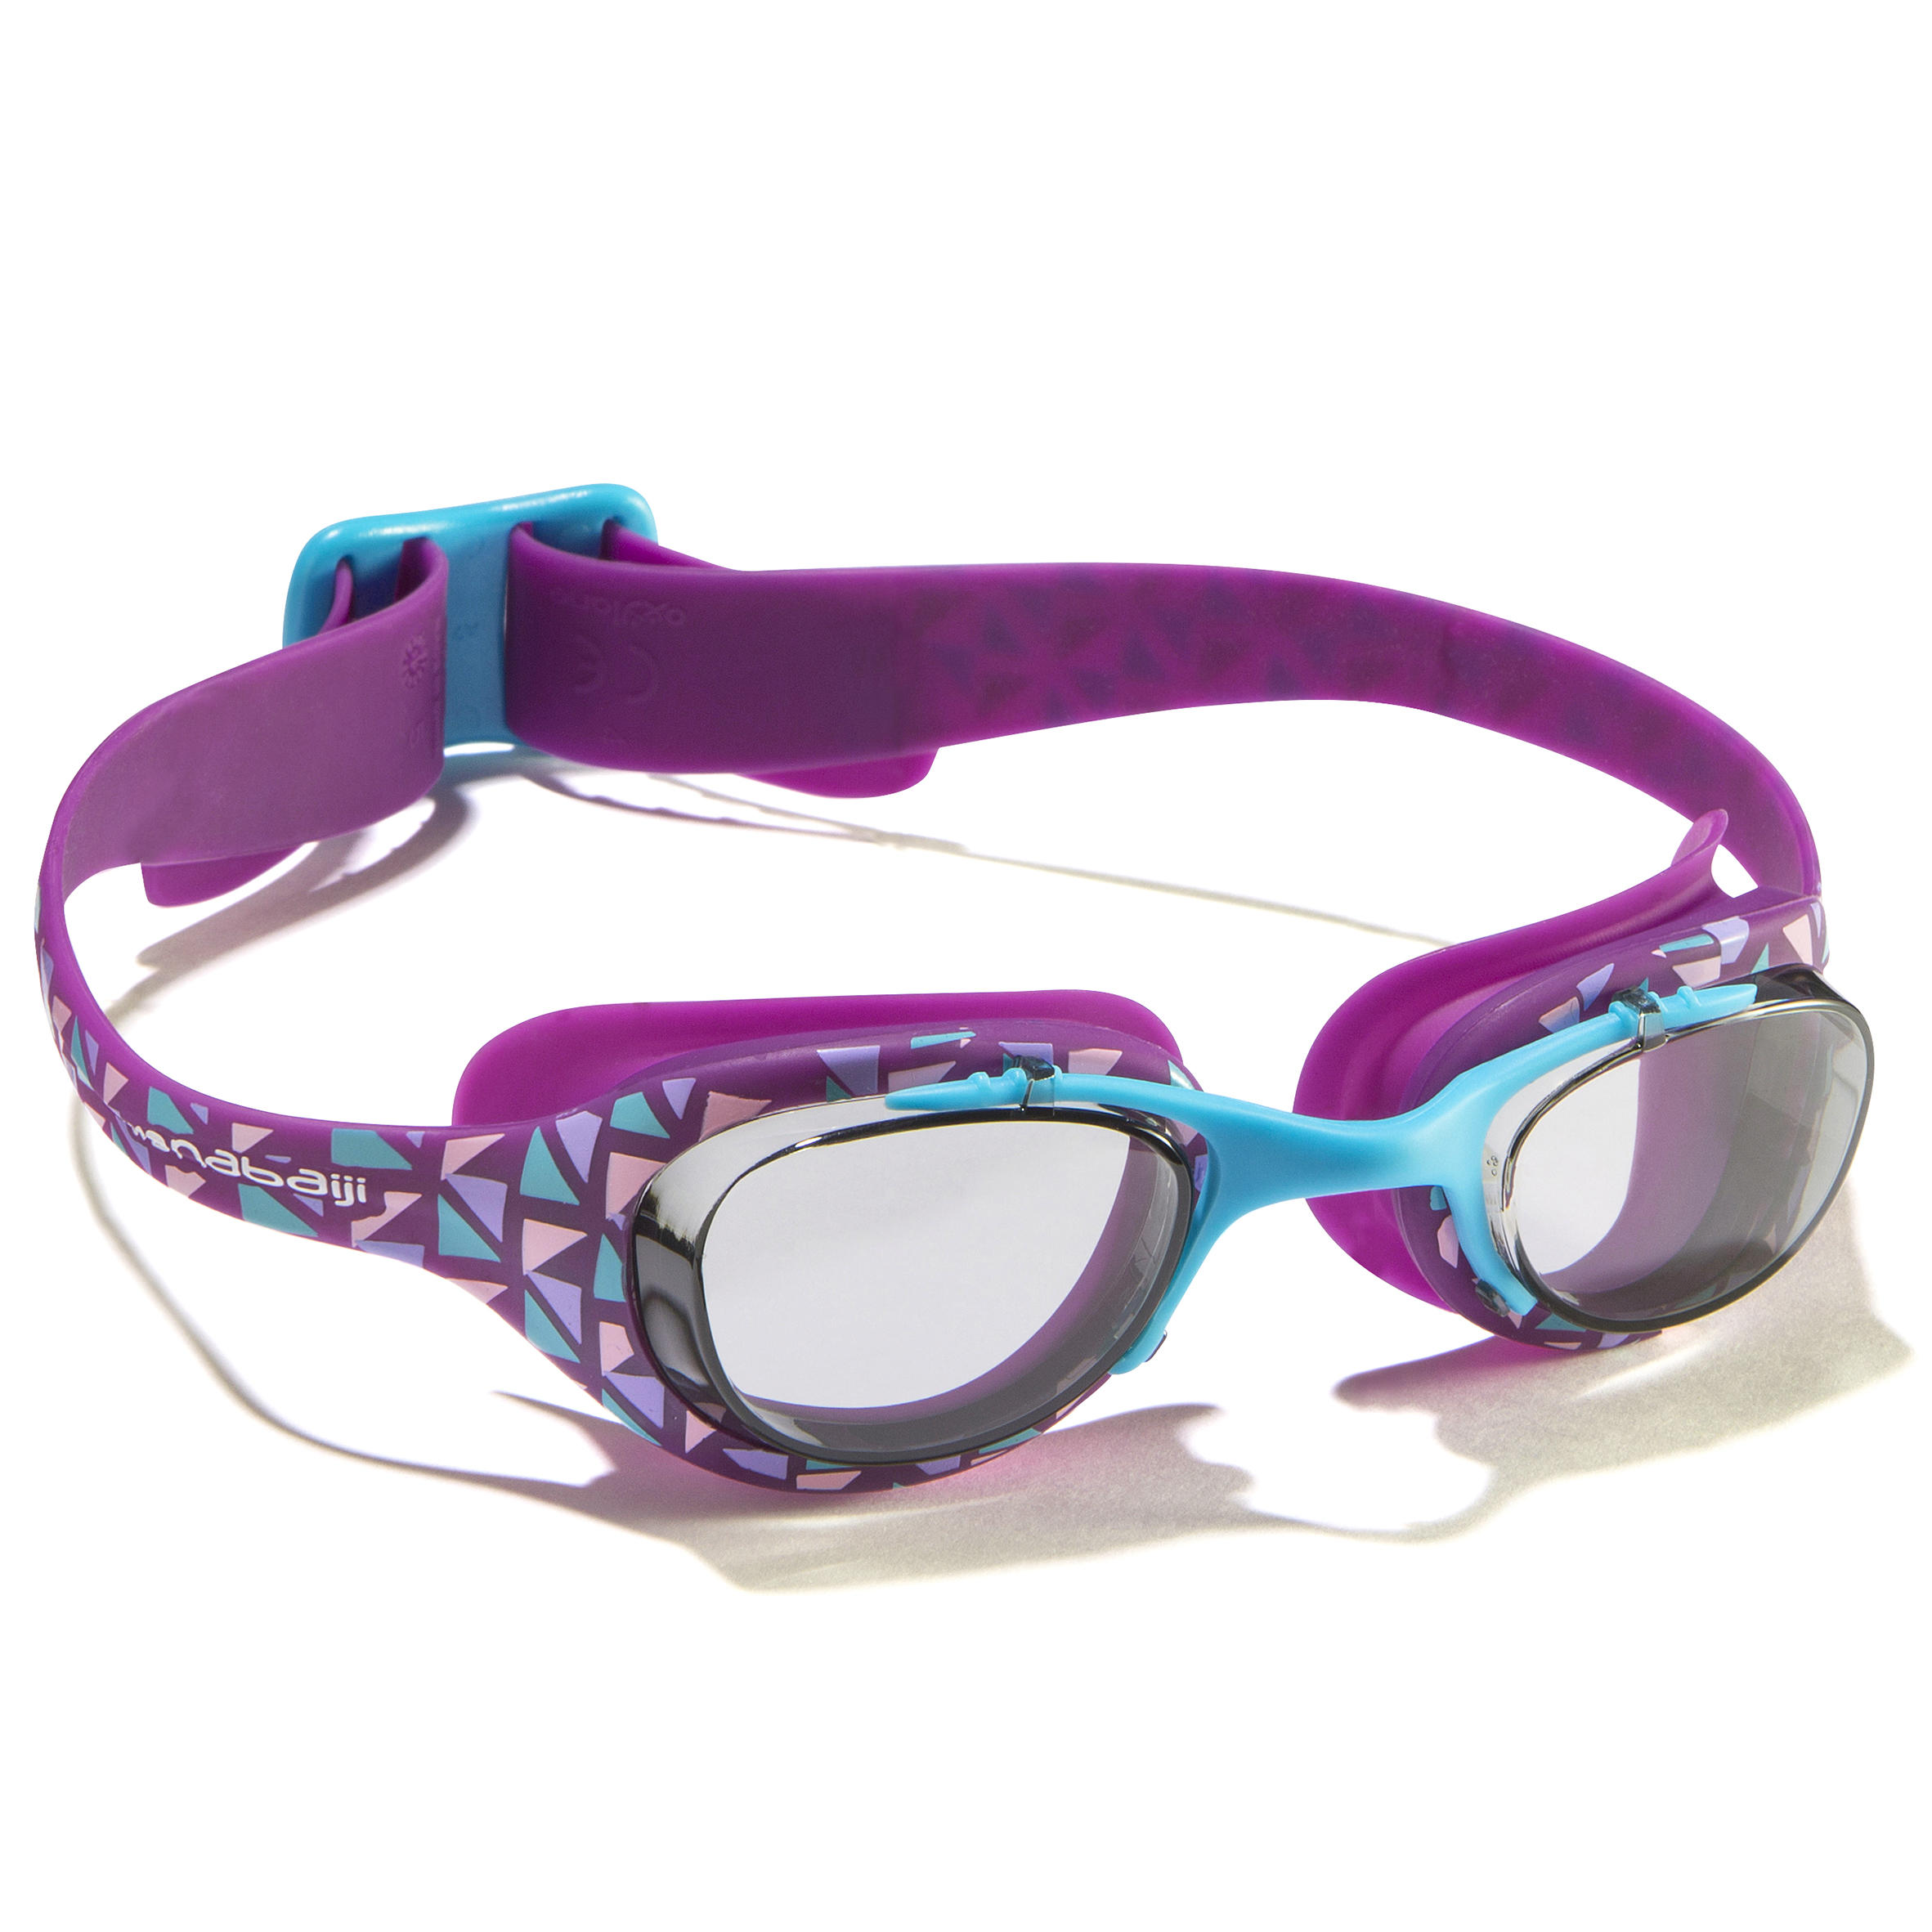 NABAIJI XBASE PRINT swimming goggles size L - Allside purple